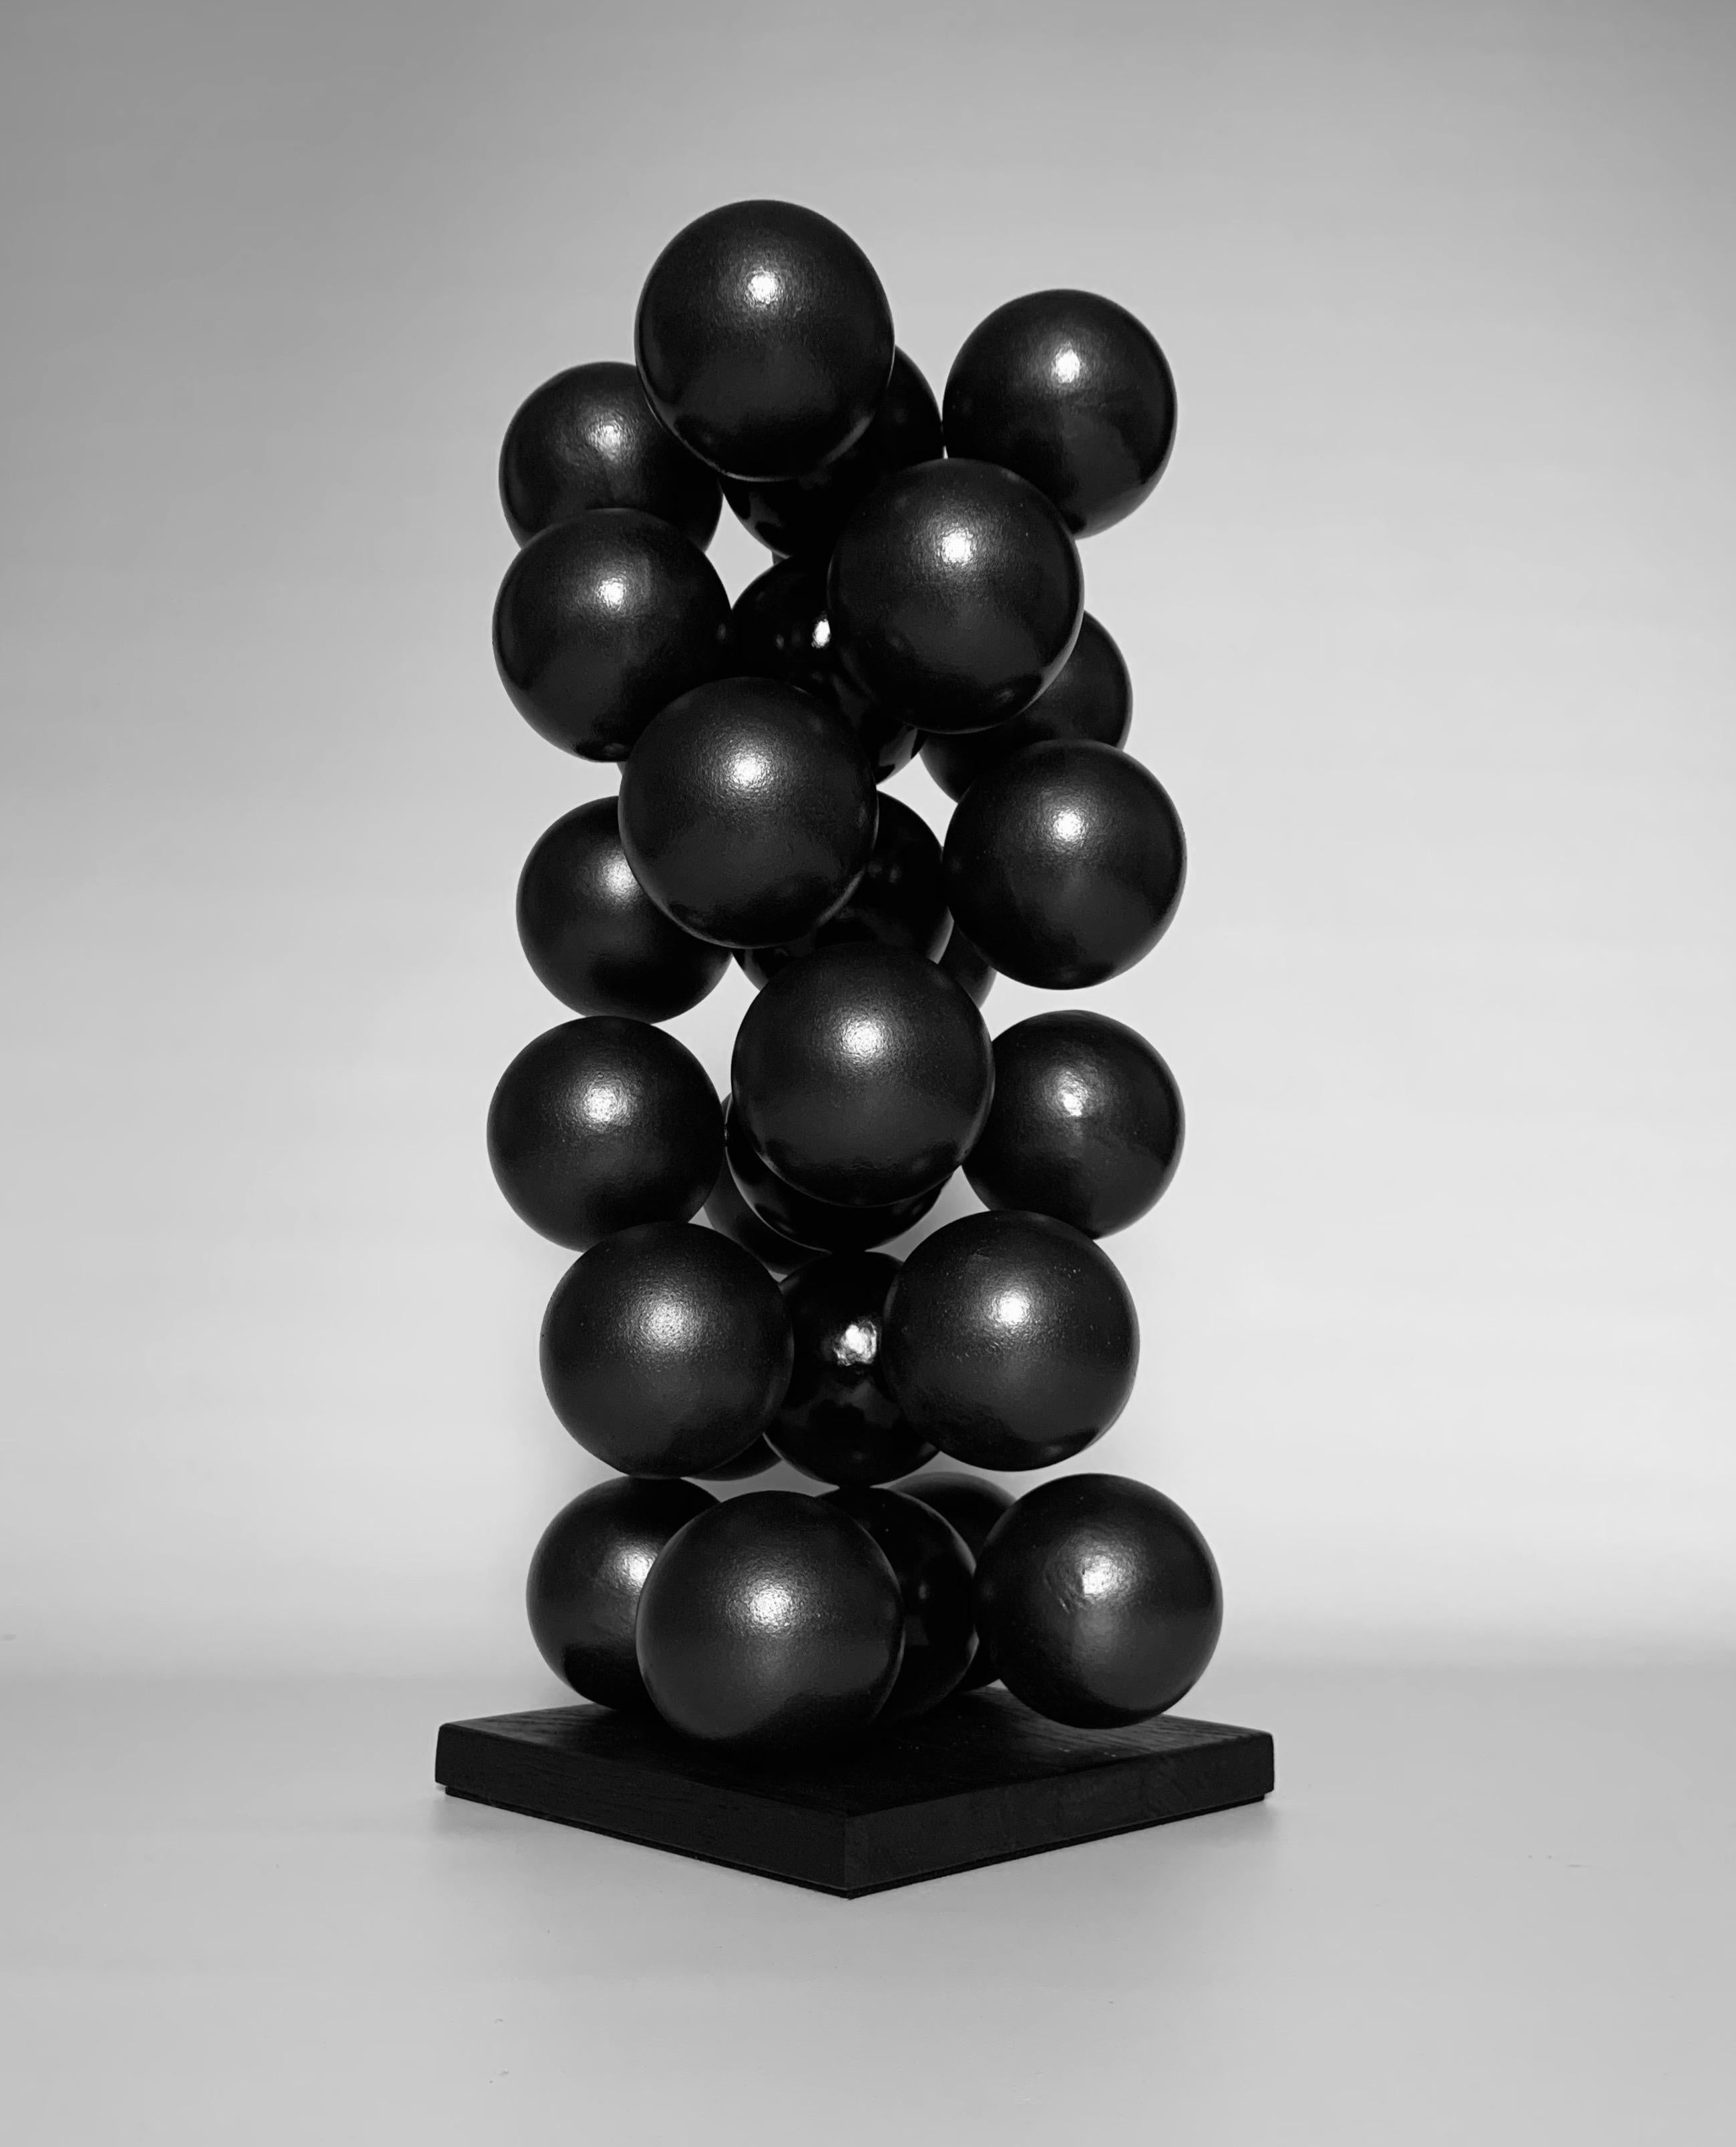 Rostyslav Kozhman Figurative Sculpture - Time Tornado Steel Black Sphere Abstract Sculpture